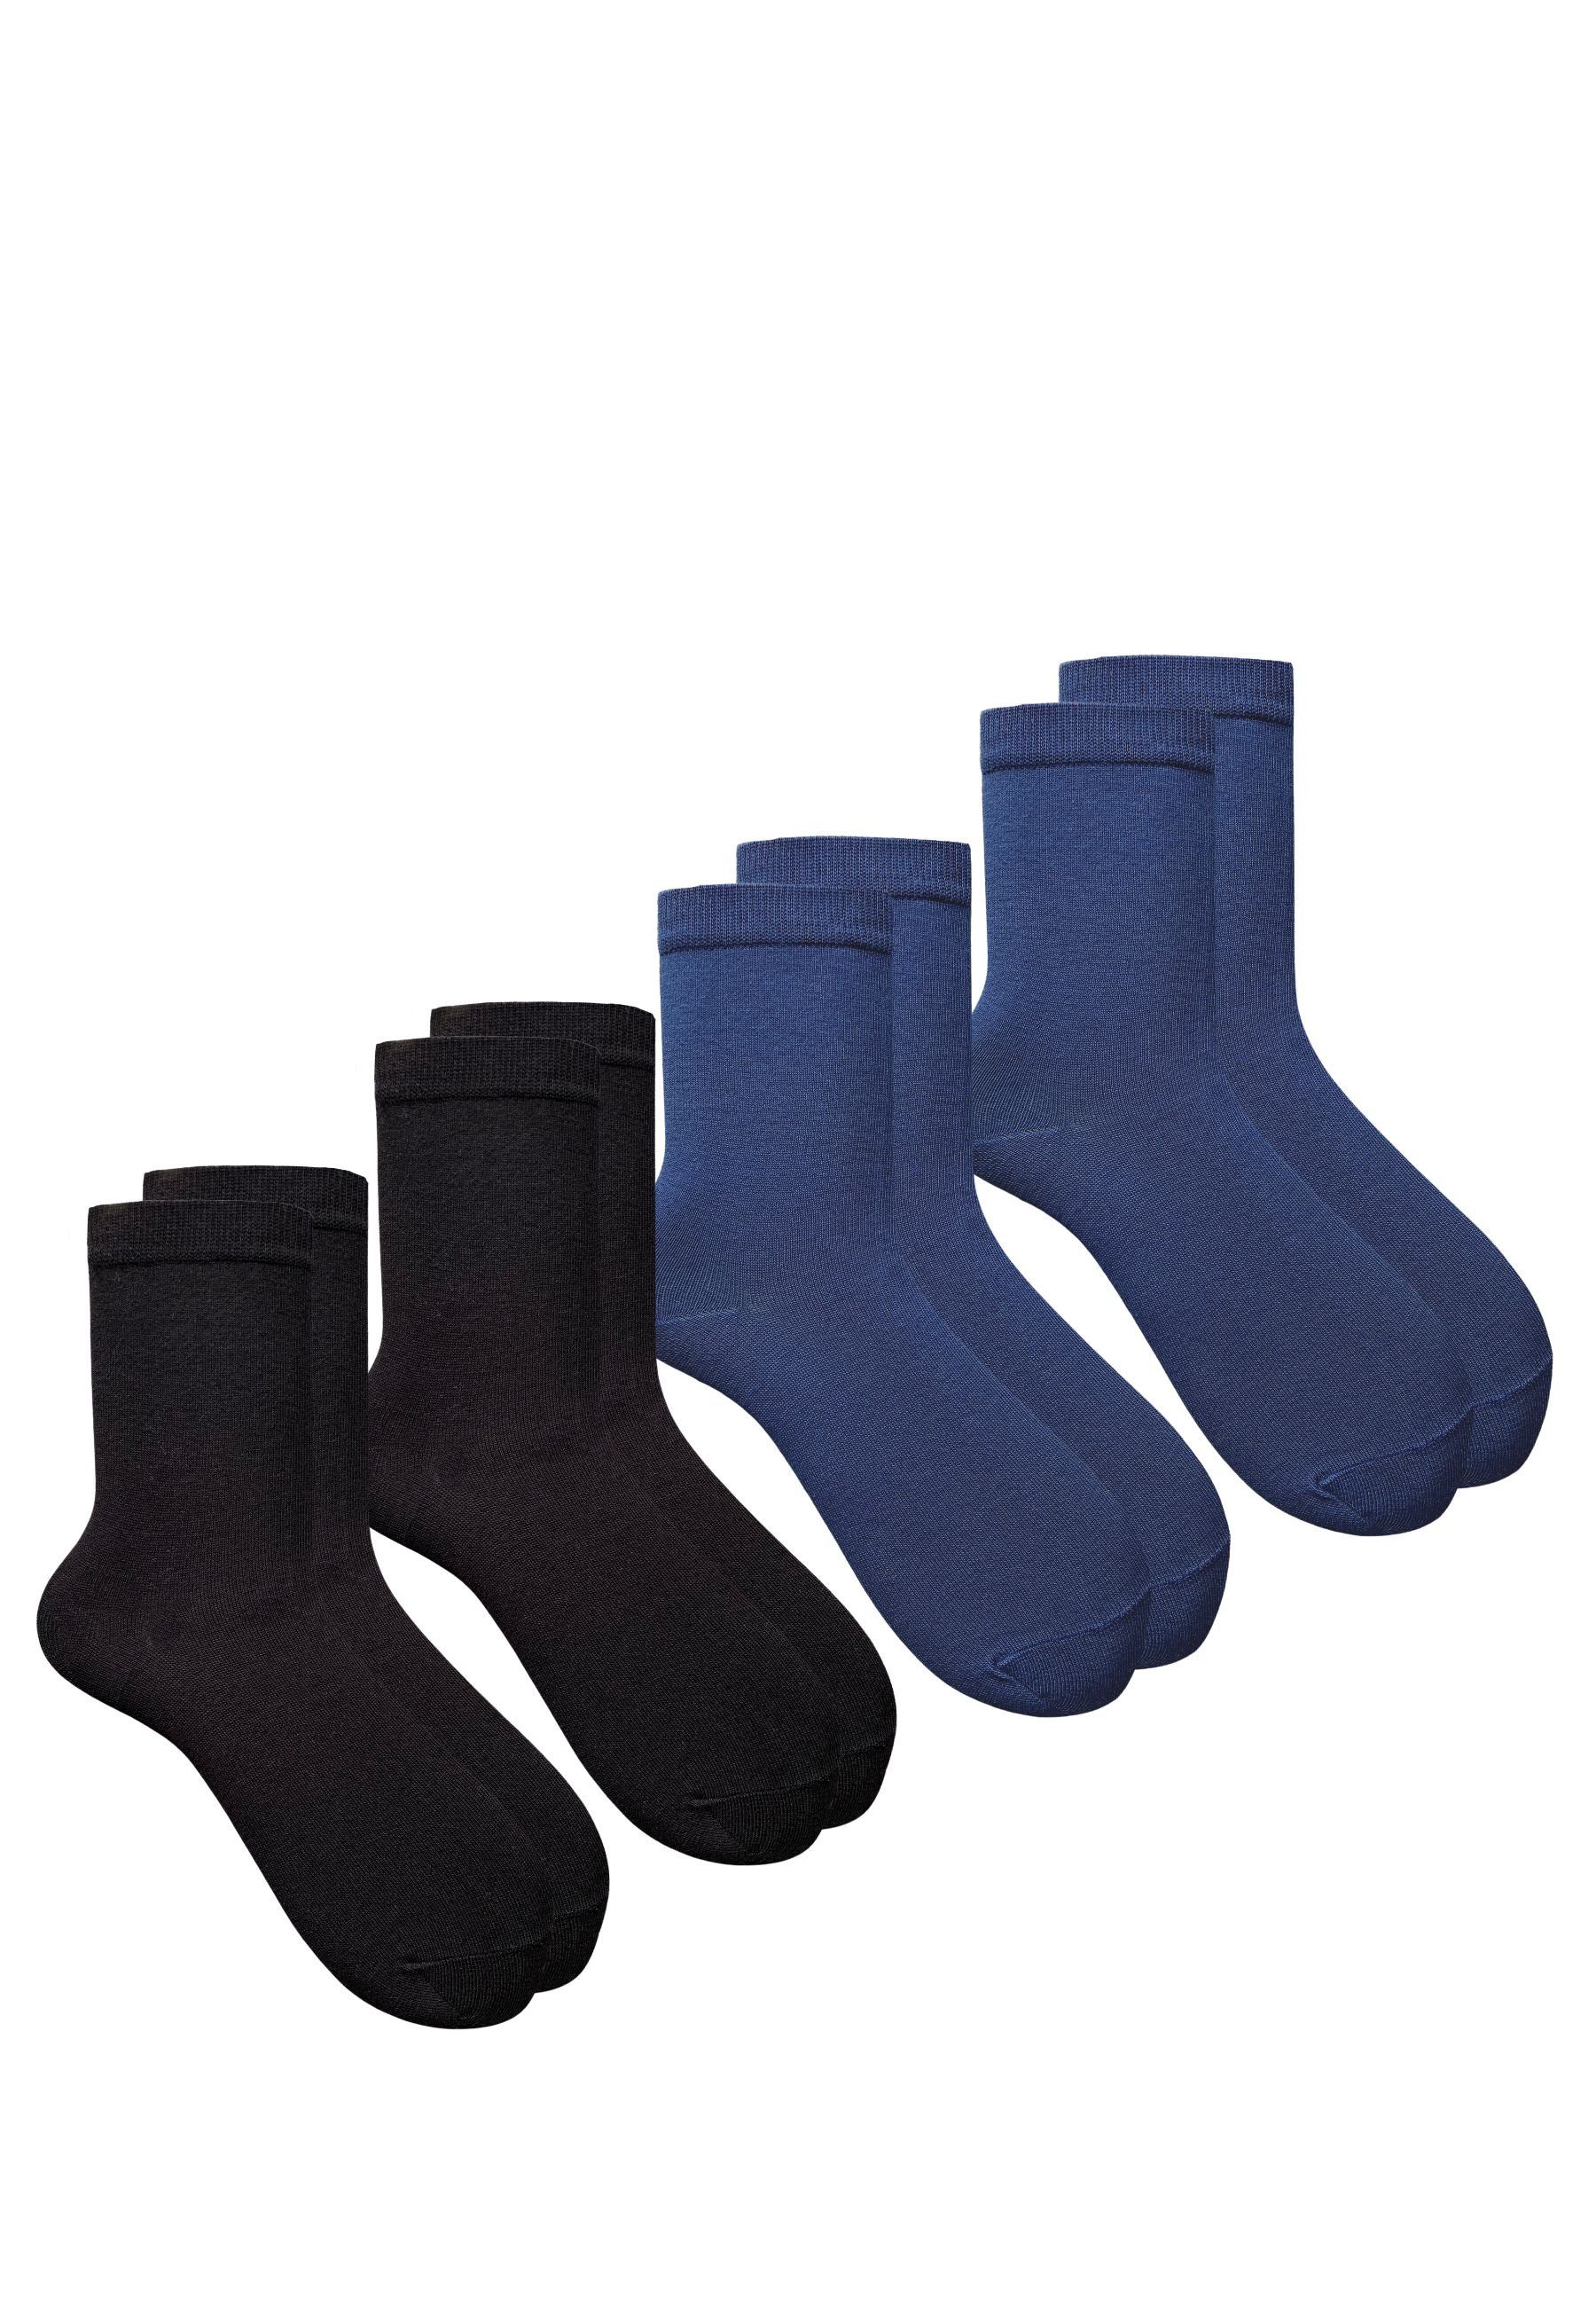 HESE SOX Basicsocken Socken 5 PAAR BAUMWOLLE SOCKEN NO.15 Bunt